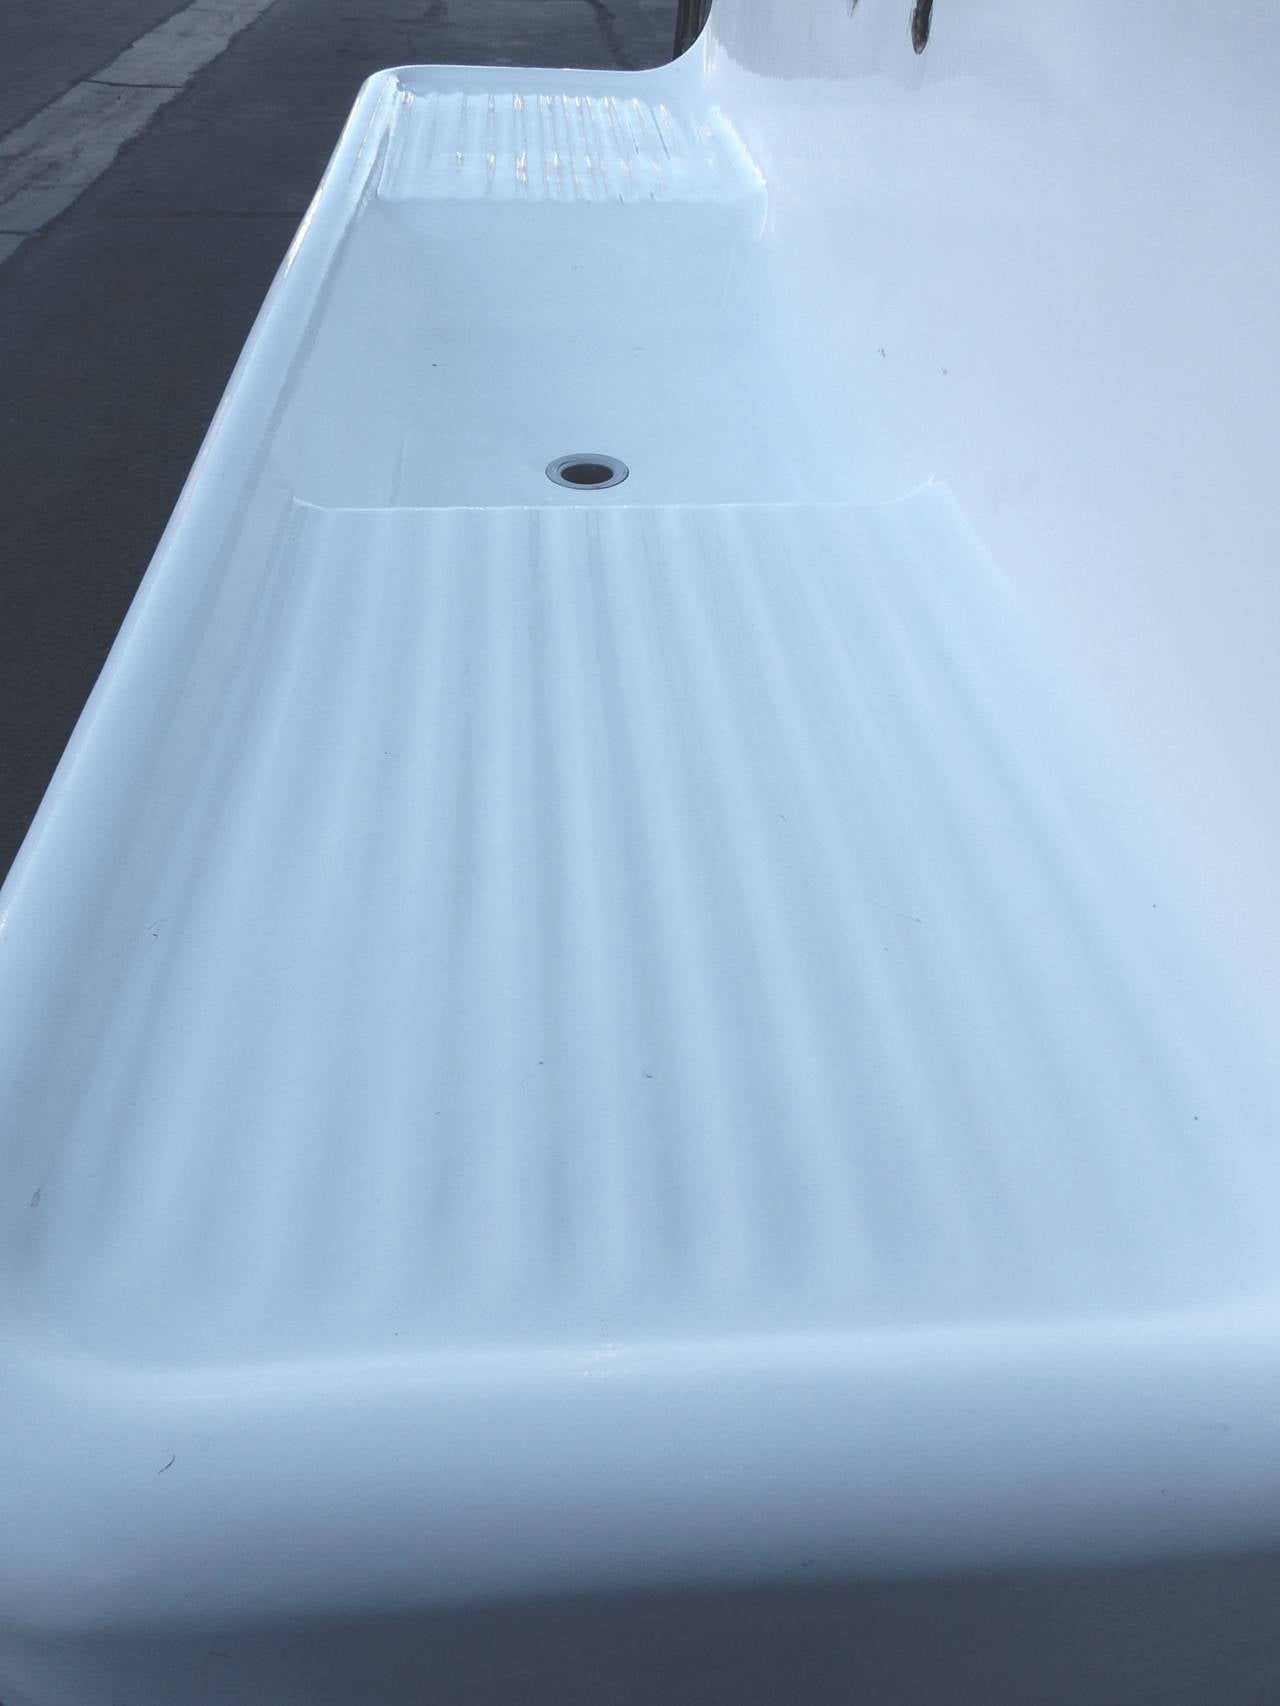 porcelain farm sink with drainboard